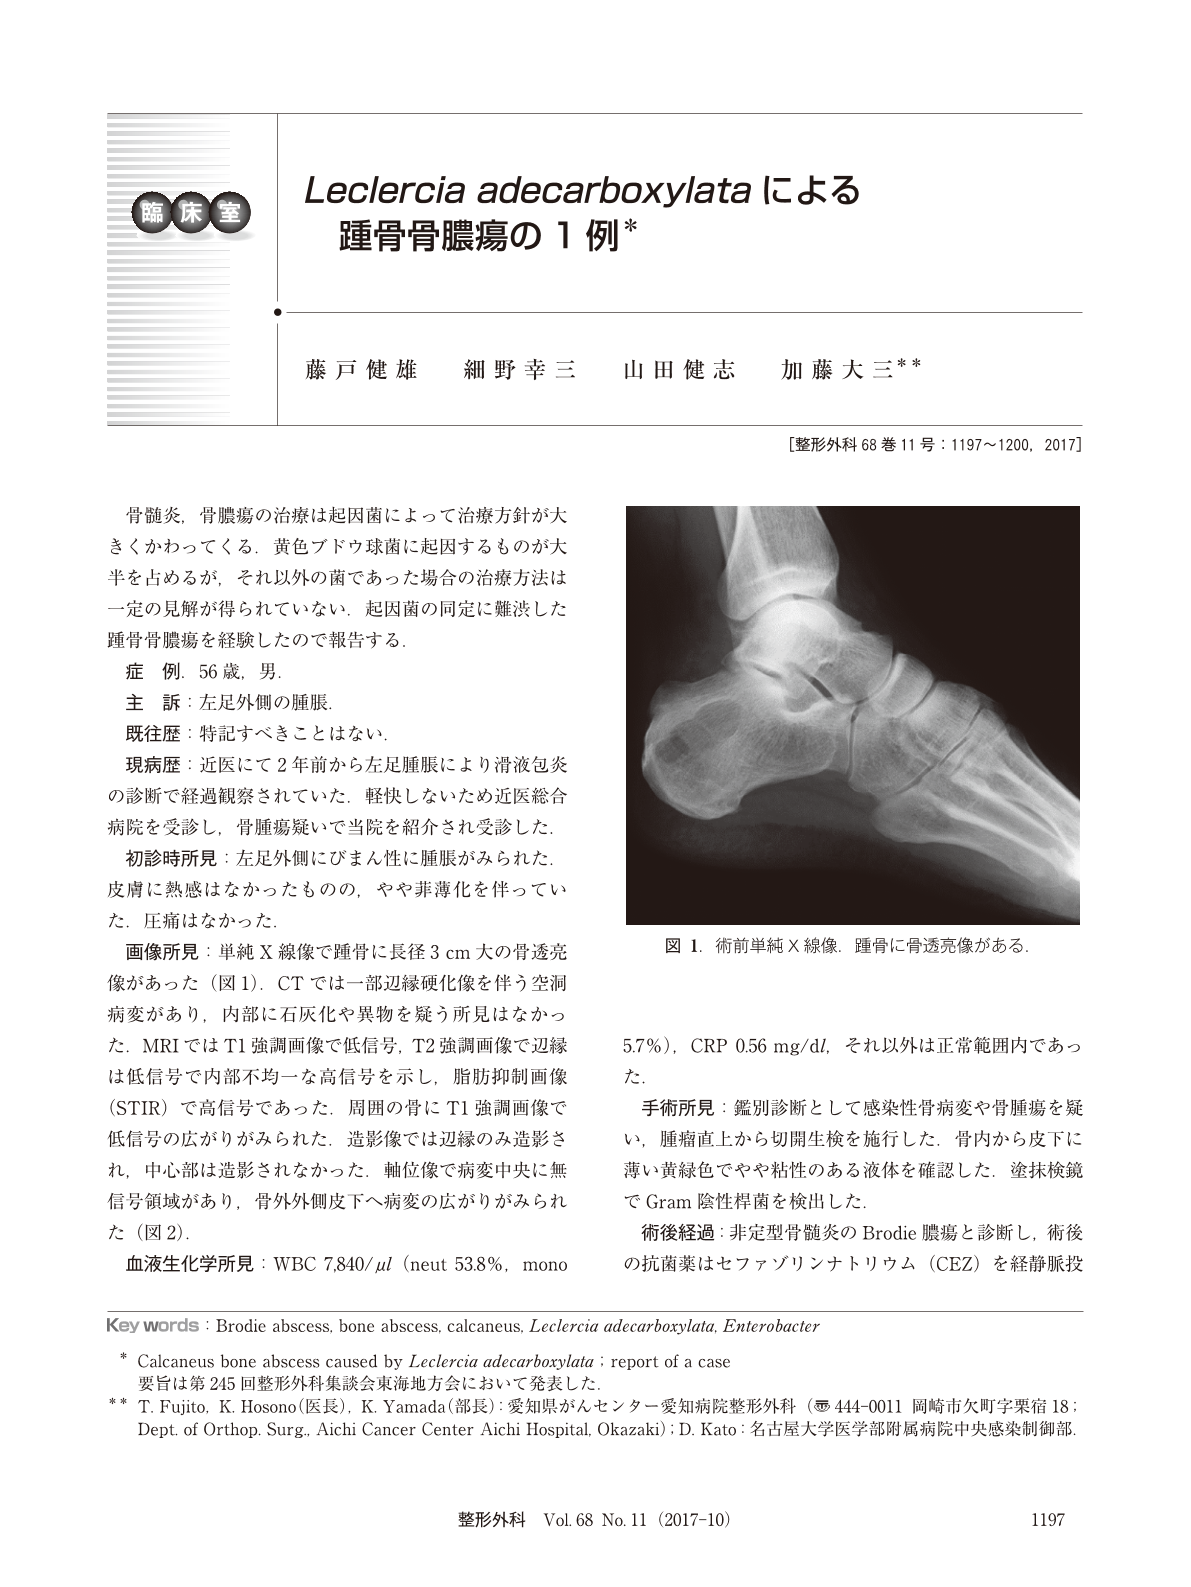 Leclercia Adecarboxylataによる踵骨骨膿瘍の1例 臨床雑誌整形外科 68巻11号 医書 Jp